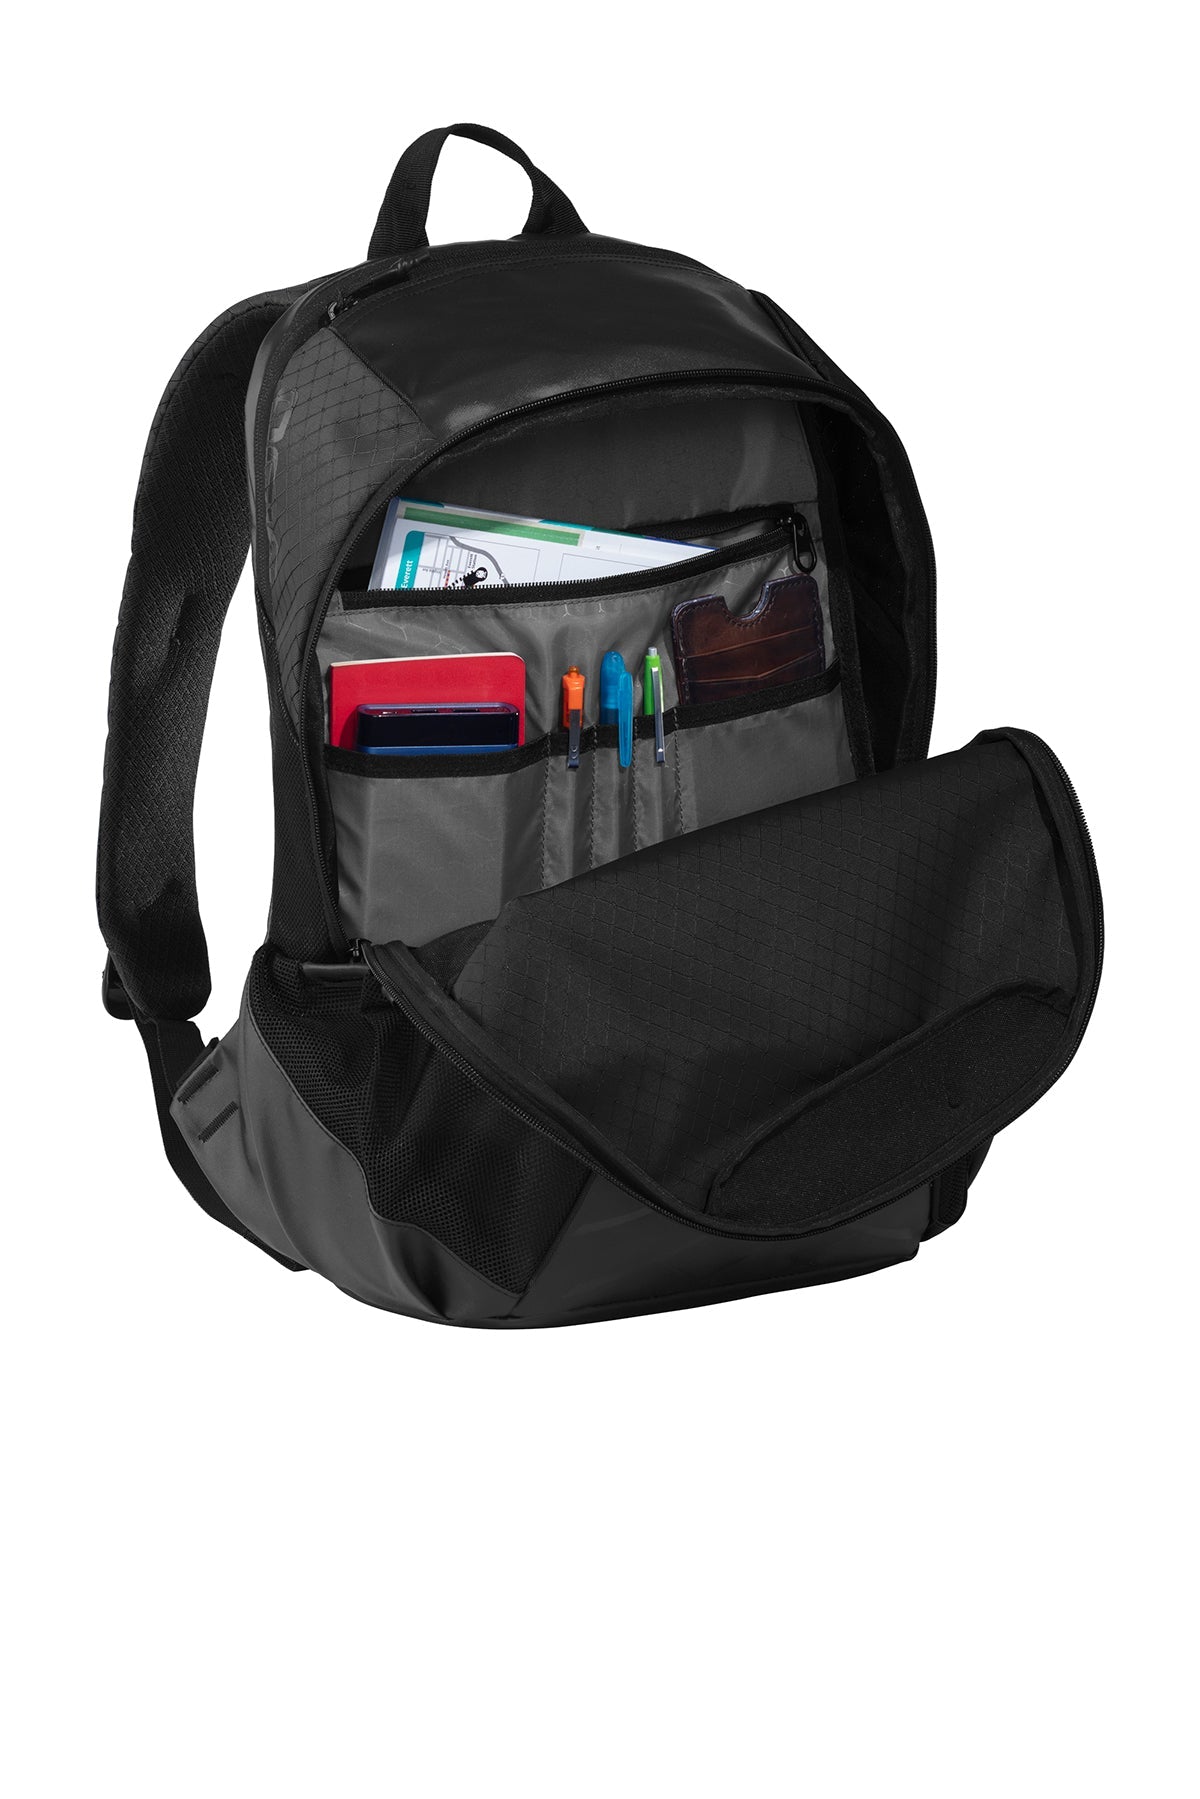 OGIO Basis Customzied Backpacks, Black